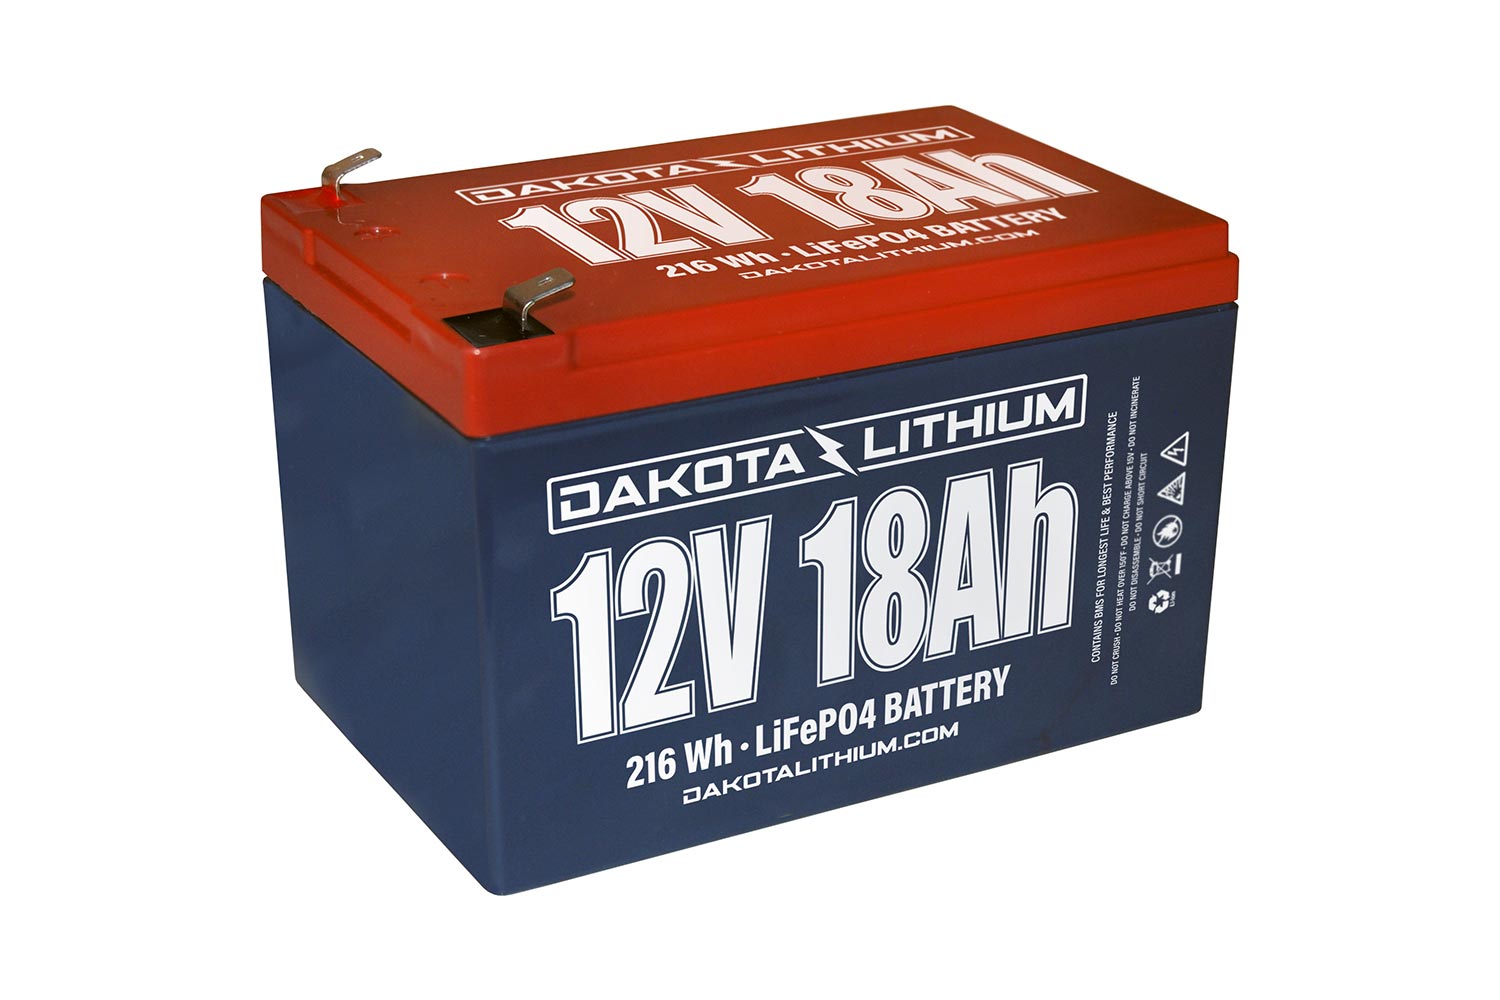 Fishing Gear: Dakota Lithium 12V 18Ah Battery